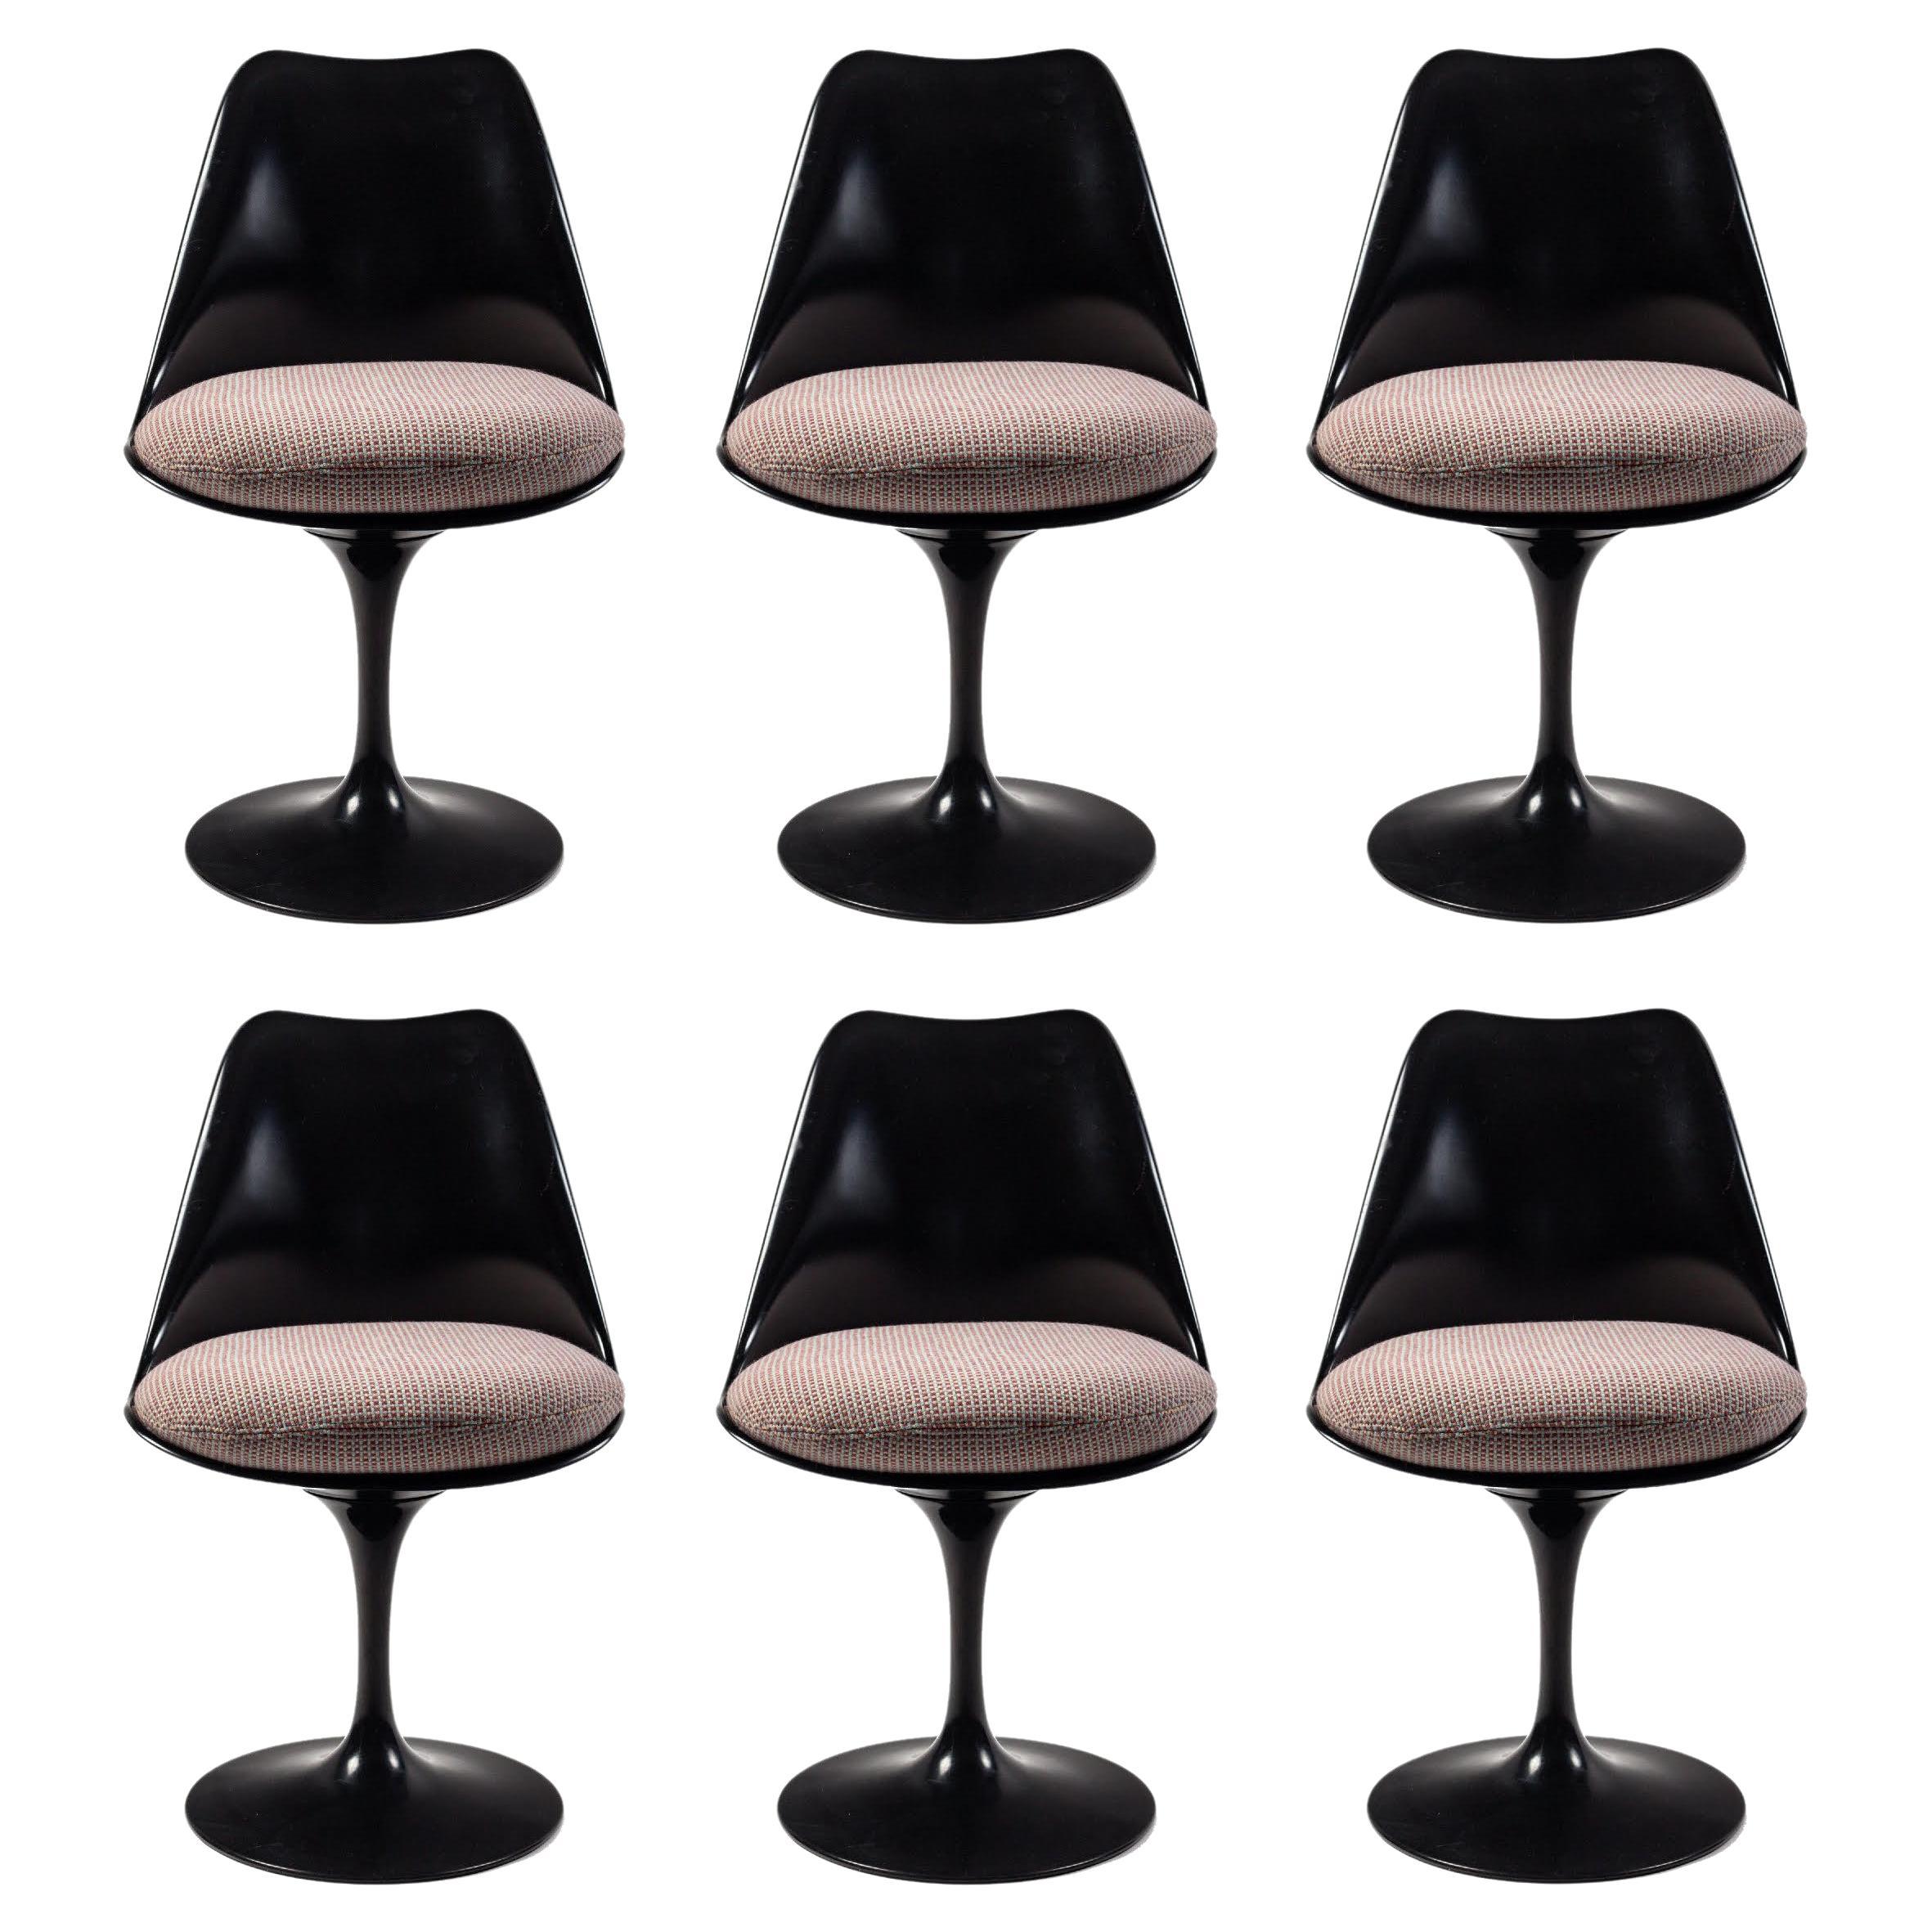 Set of 6 Tulip Dining Chairs by Eero Saarinen for Knoll, XXth Century.